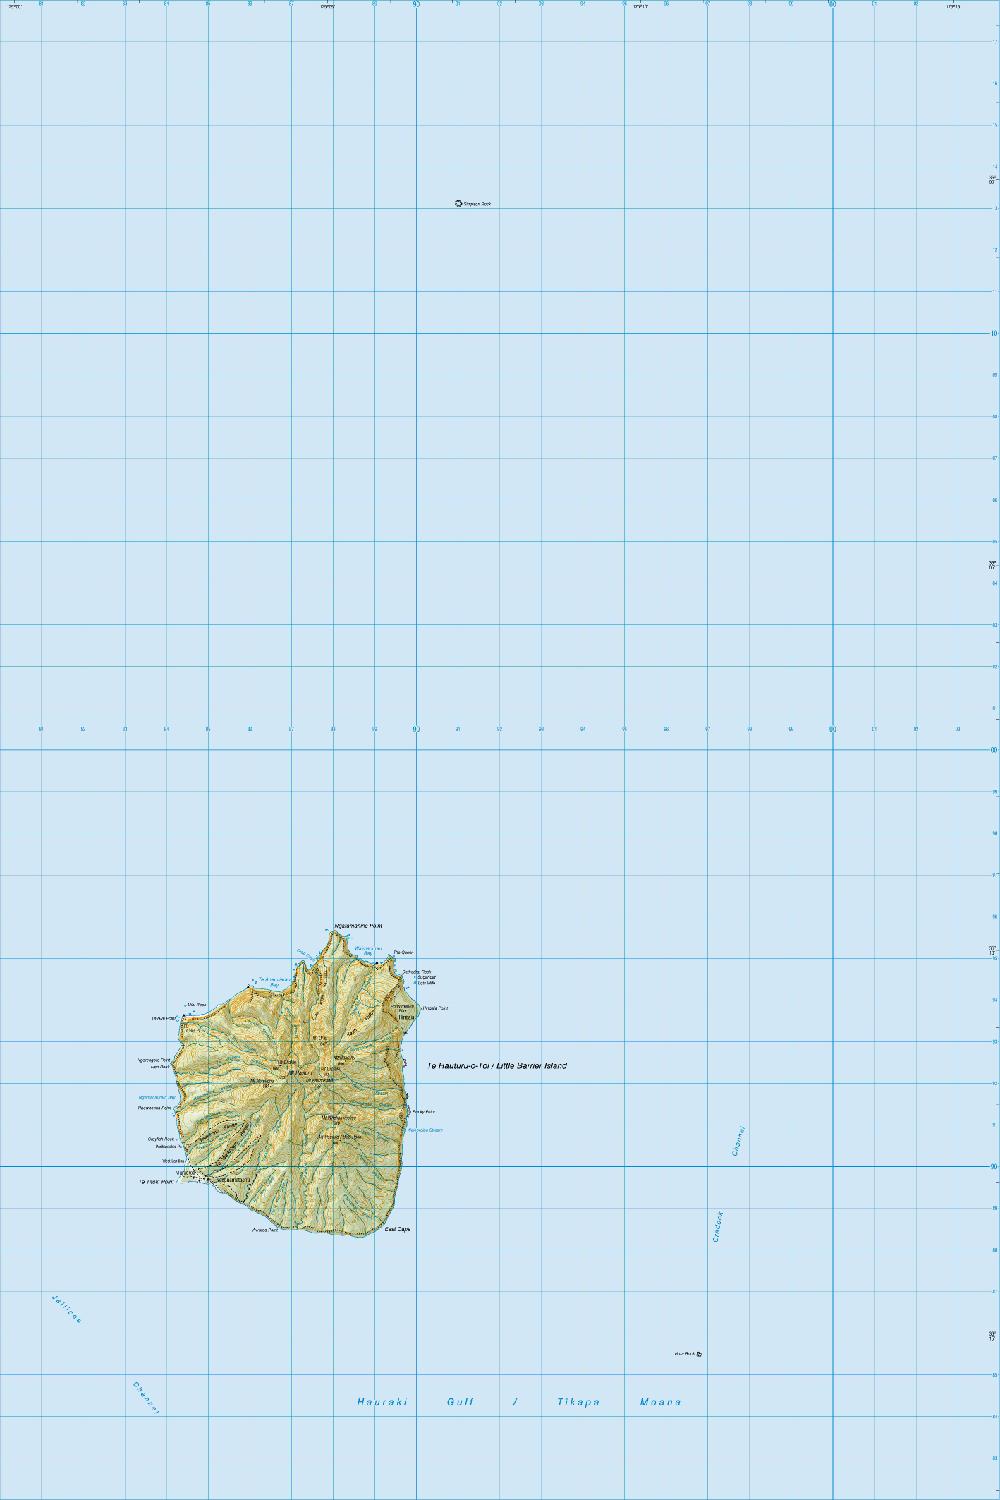 Topo map of Te Hauturu-o-Toi / Little Barrier Island